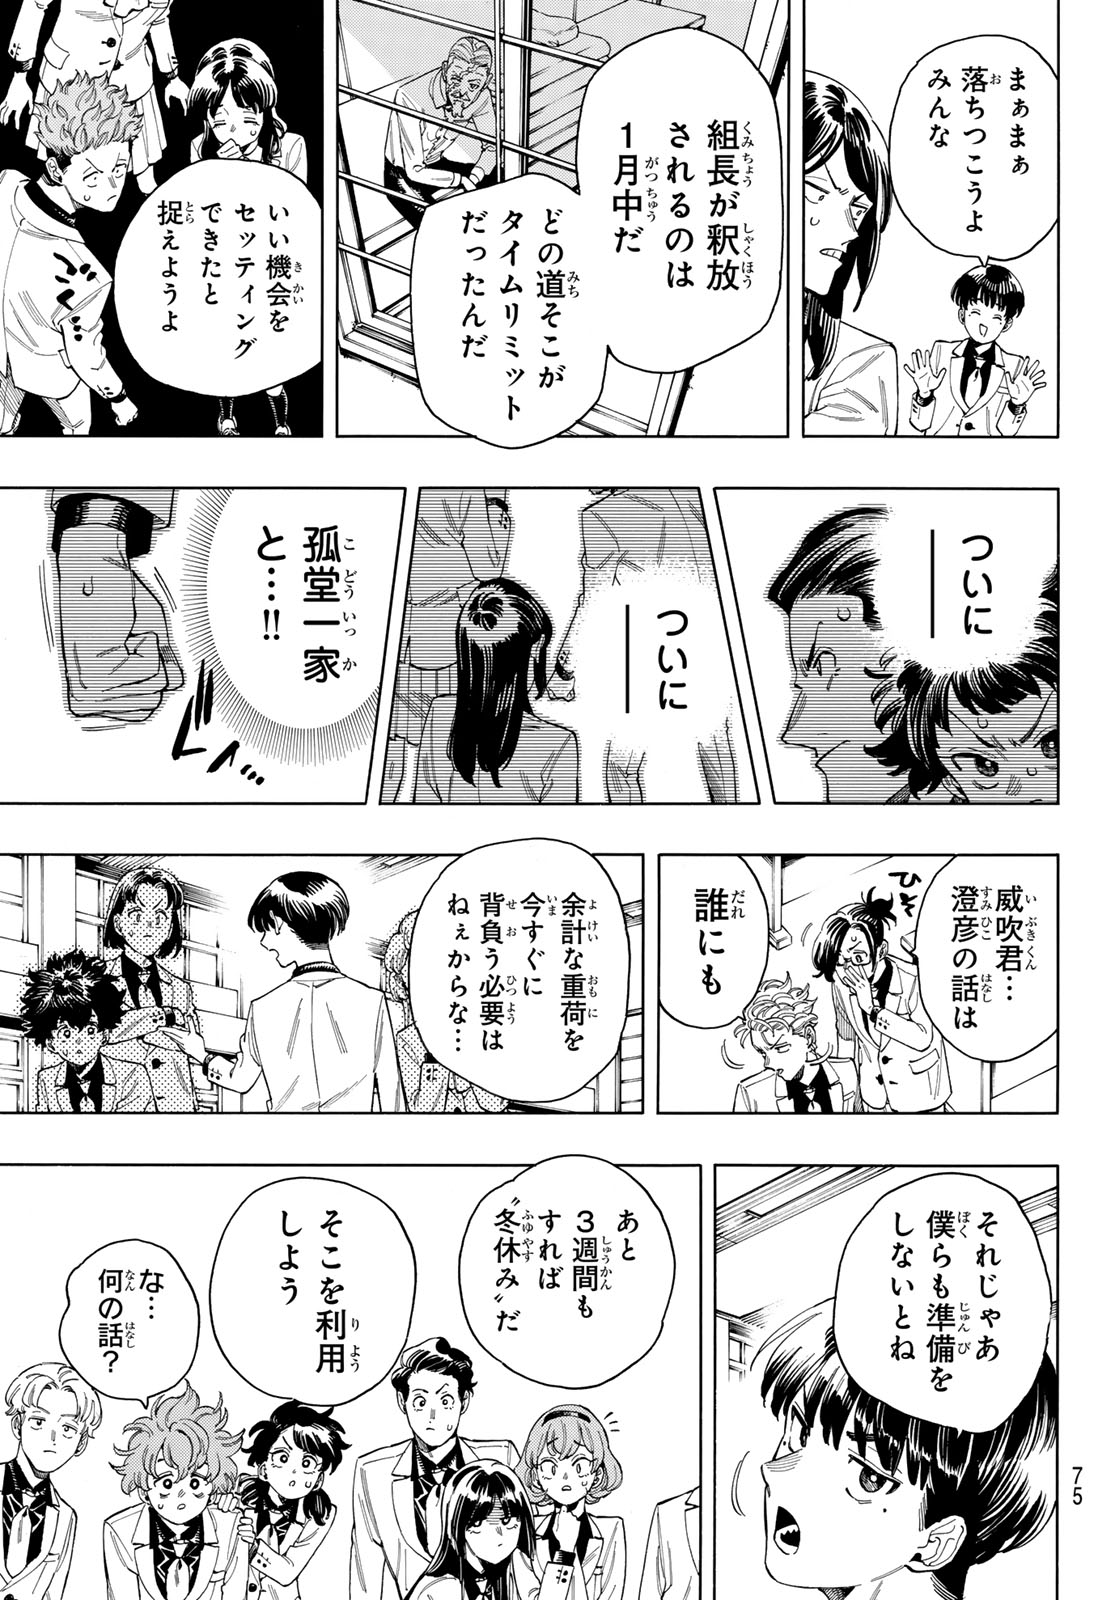 Akabane Honeko no Bodyguard - Chapter 85 - Page 17